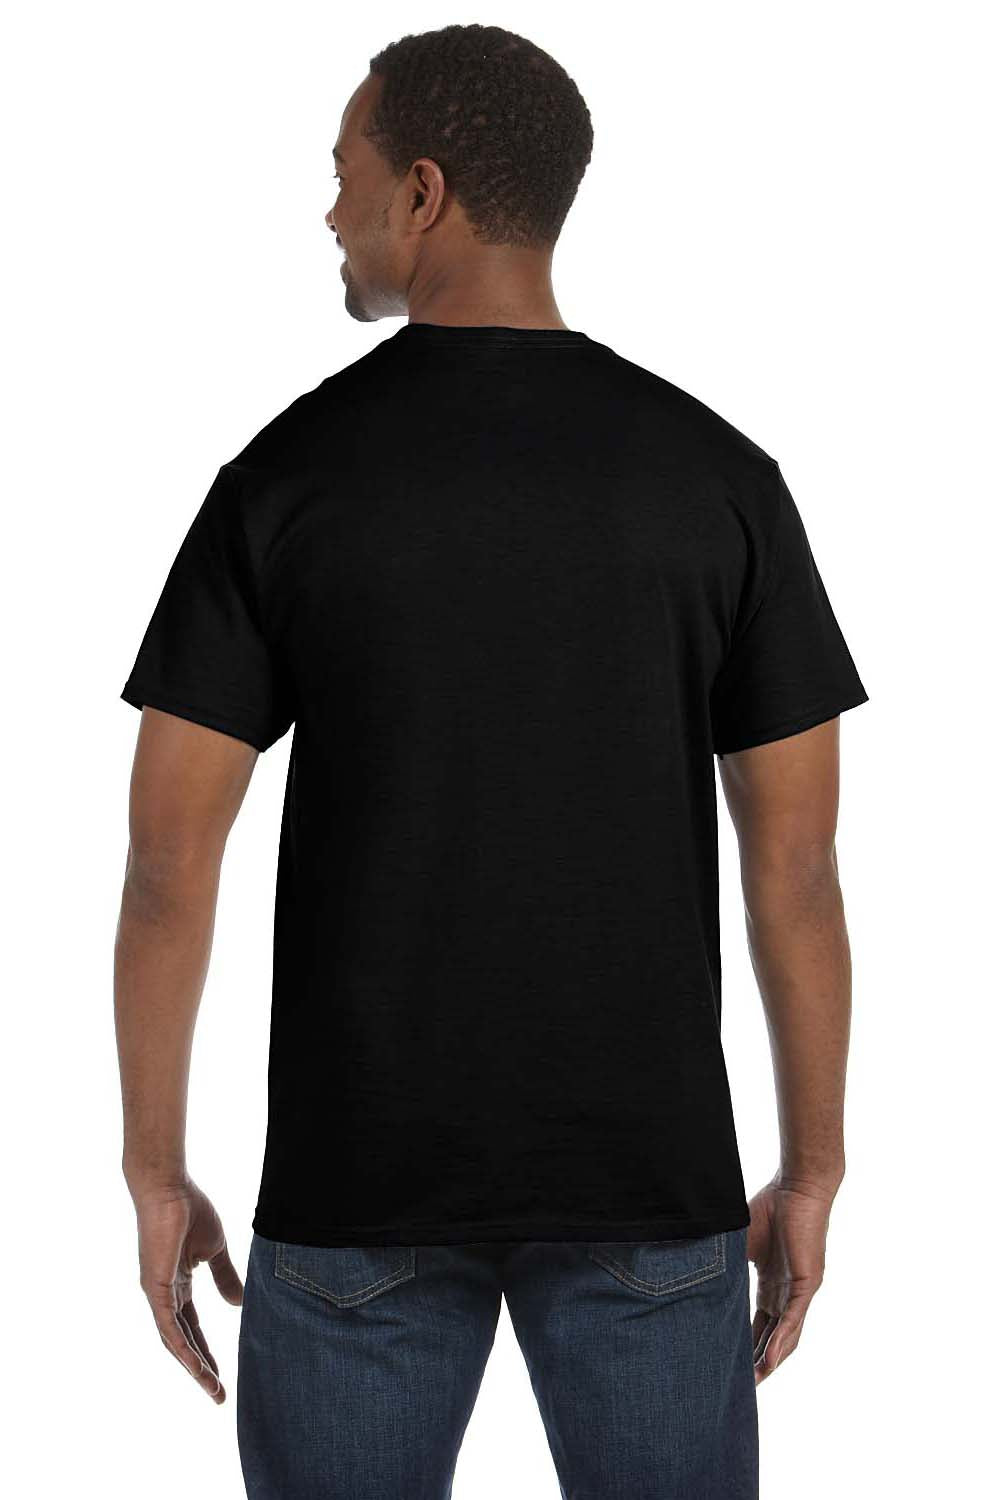 Hanes 5250T Mens ComfortSoft Short Sleeve Crewneck T-Shirt Black Back